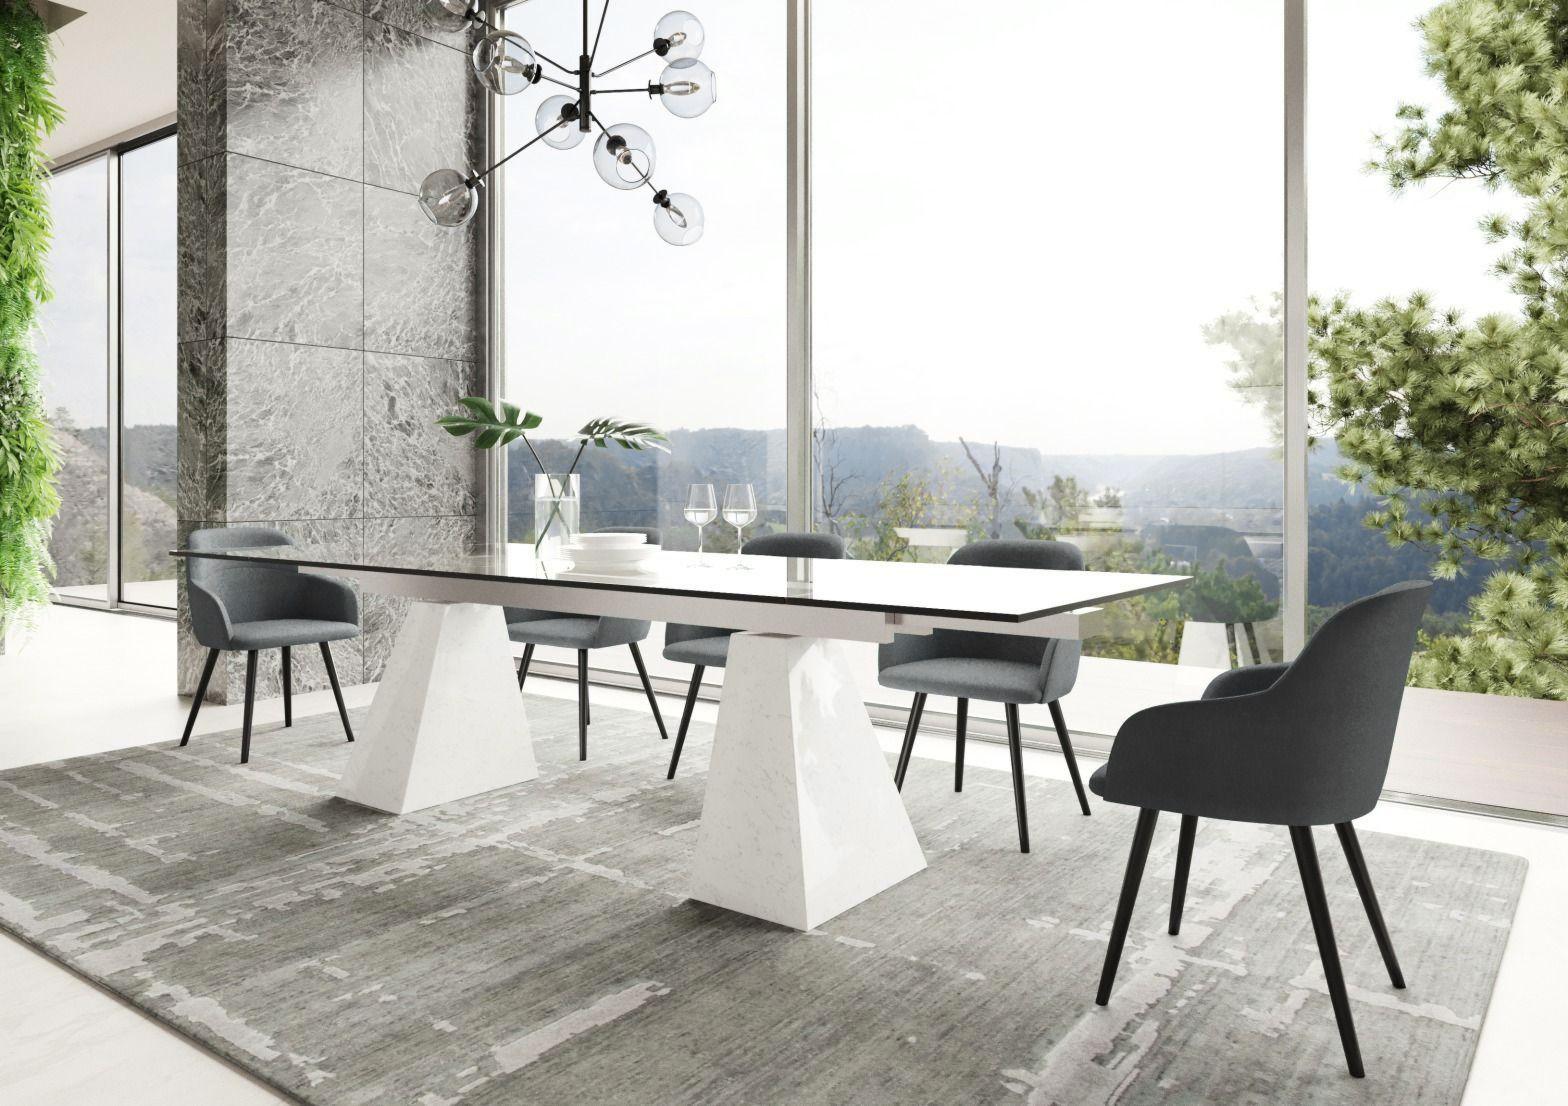 Contemporary, Modern Dining Room Set Latrobe Scranton VGYFDT8765-5-DT-WHT-7pcs in Glass Linen